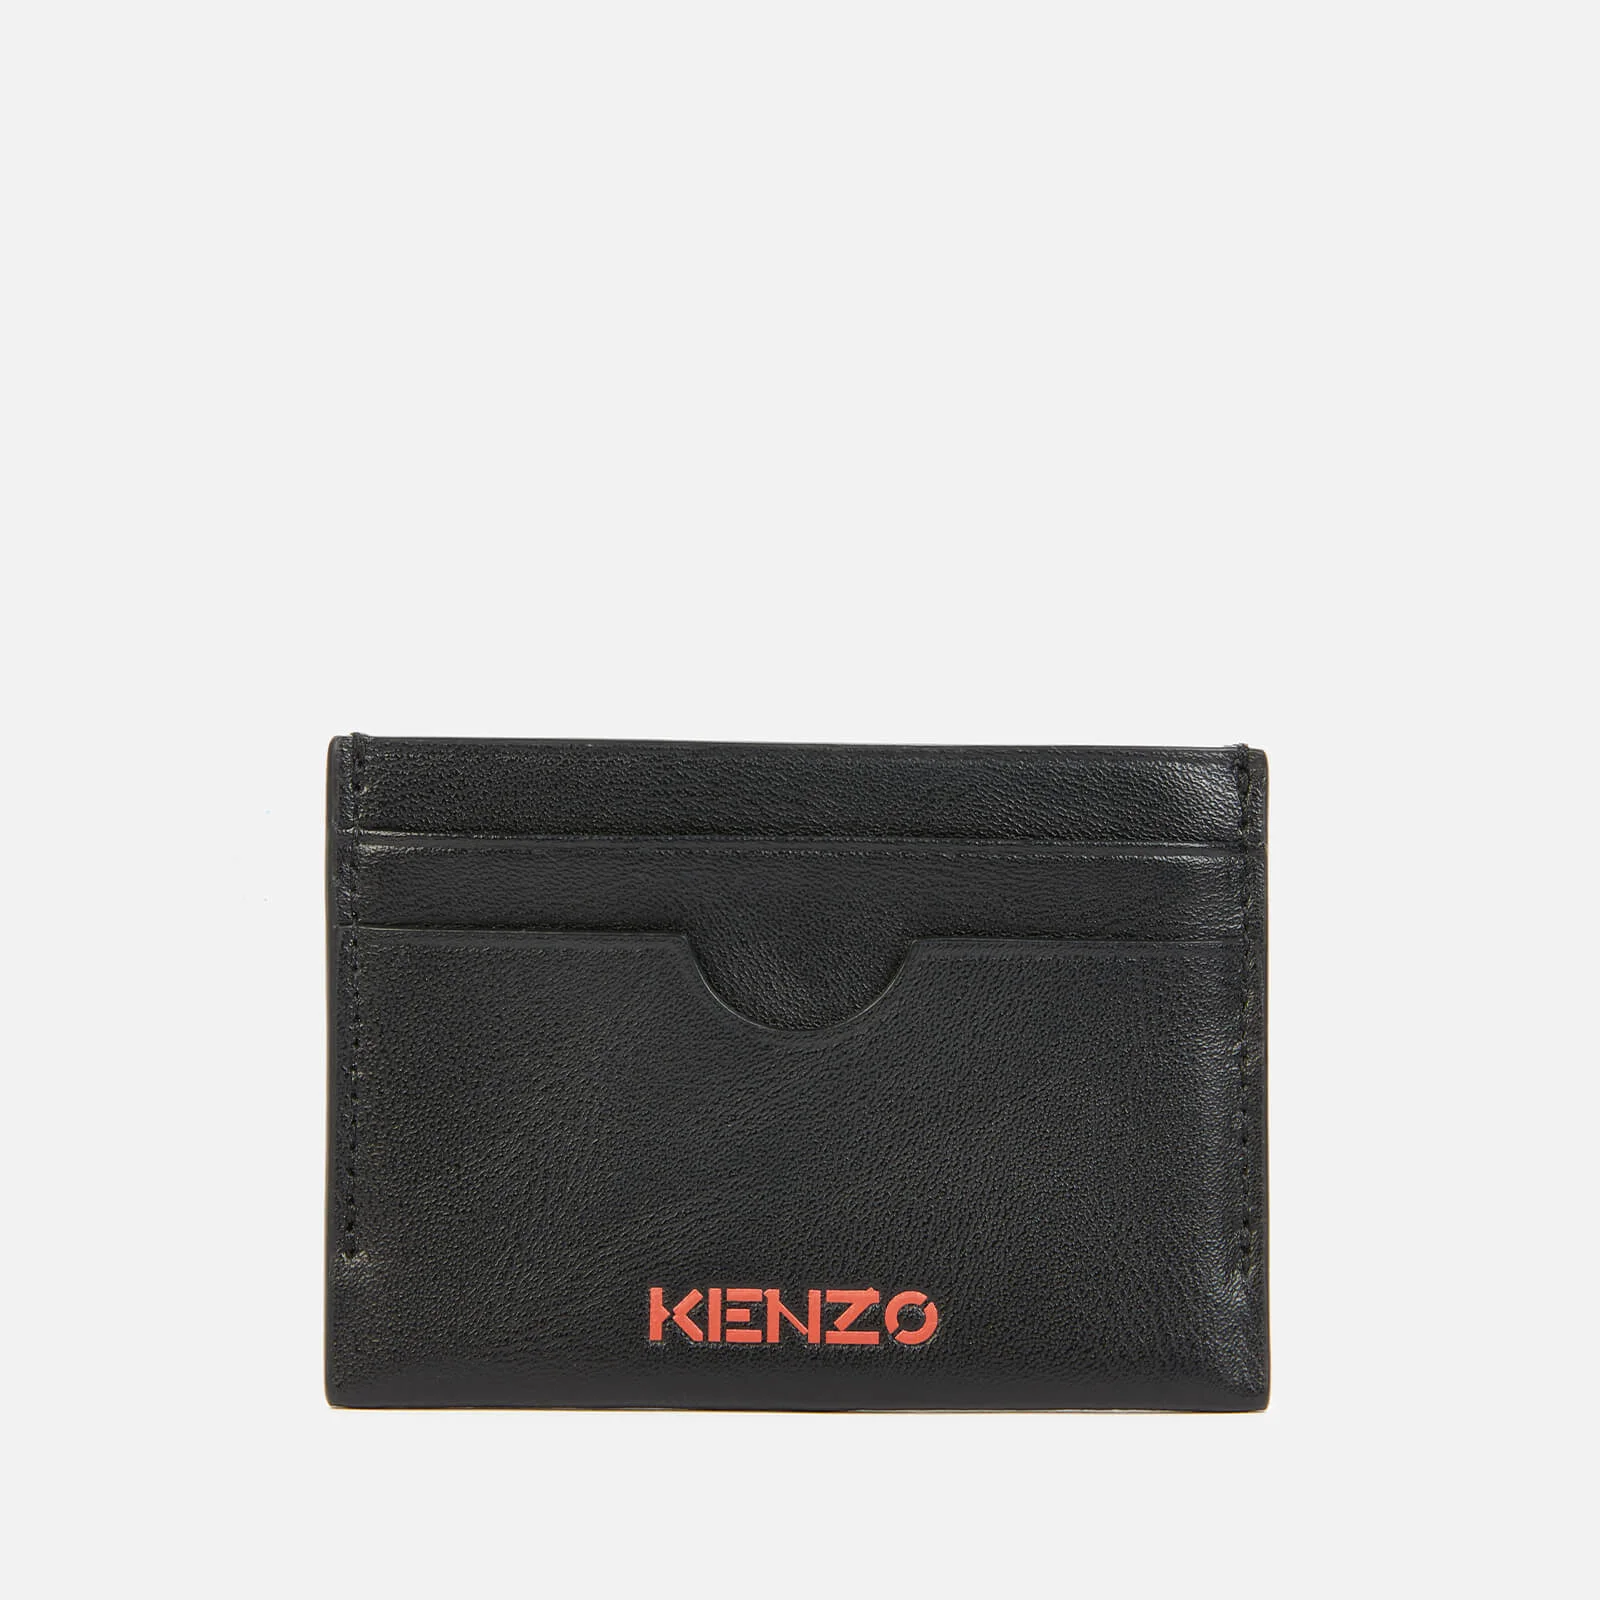 KENZO Men's Leather Cardholder - Black Image 1